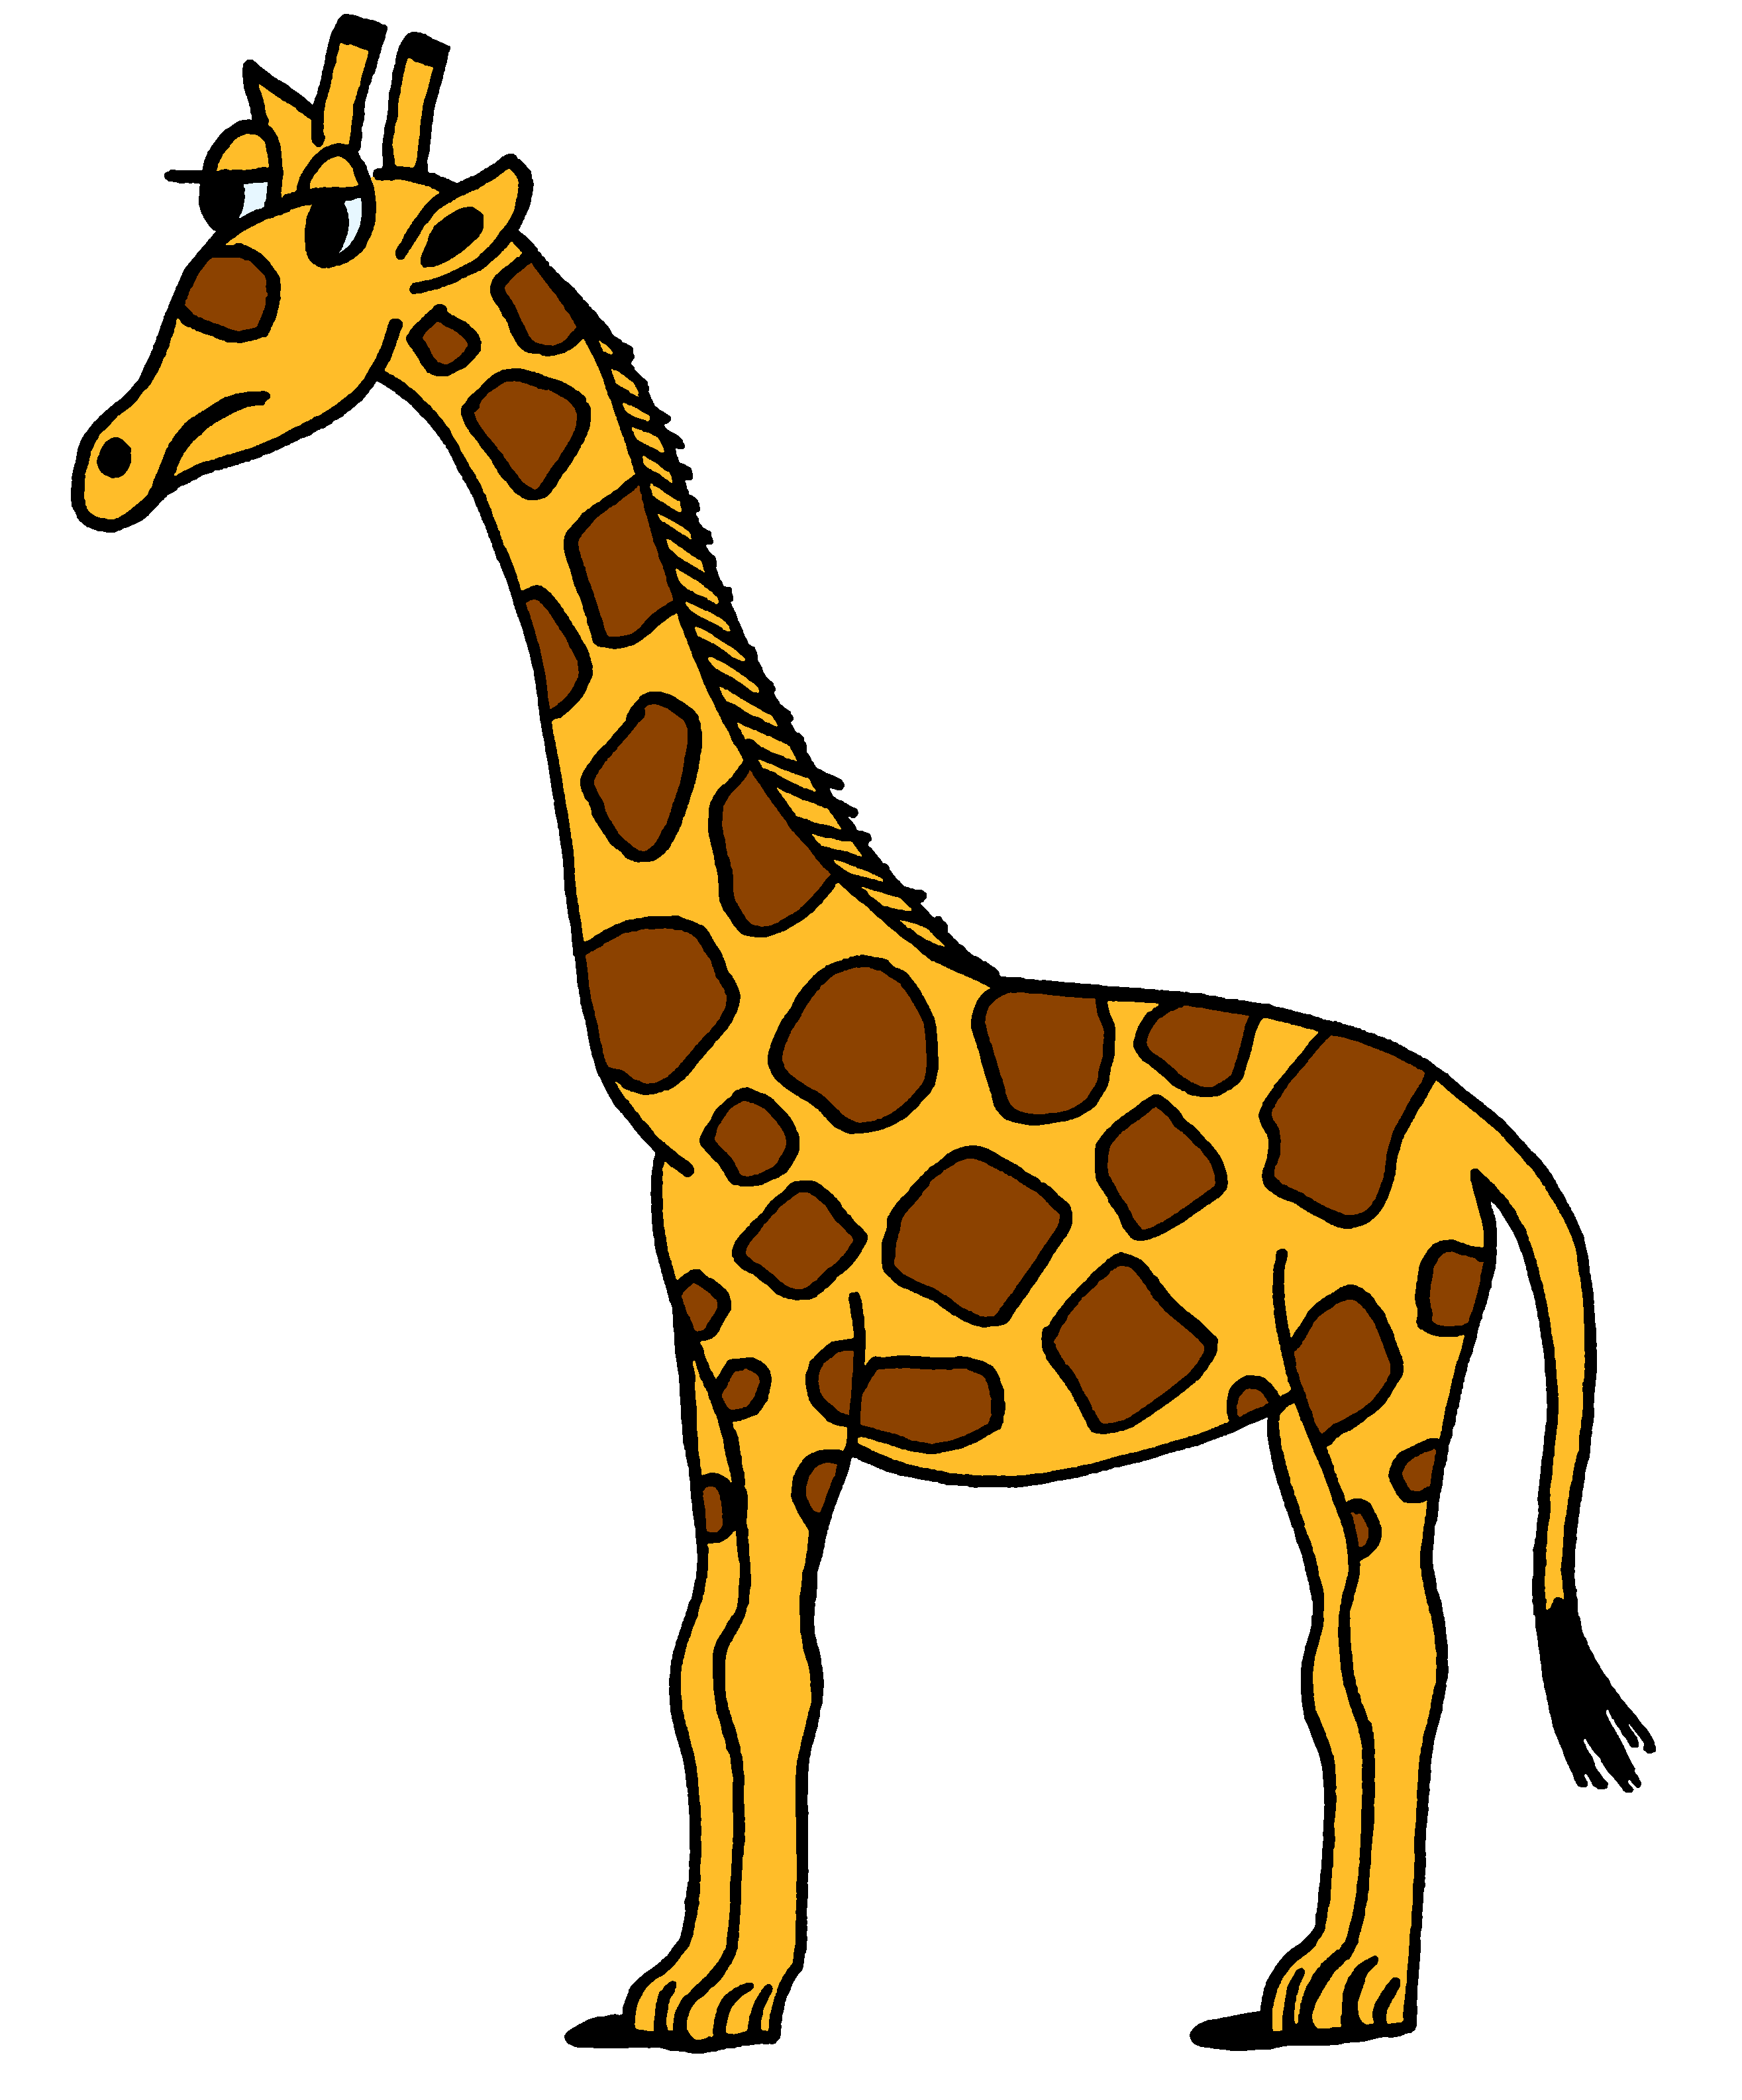 Giraffe clipart clipartfox